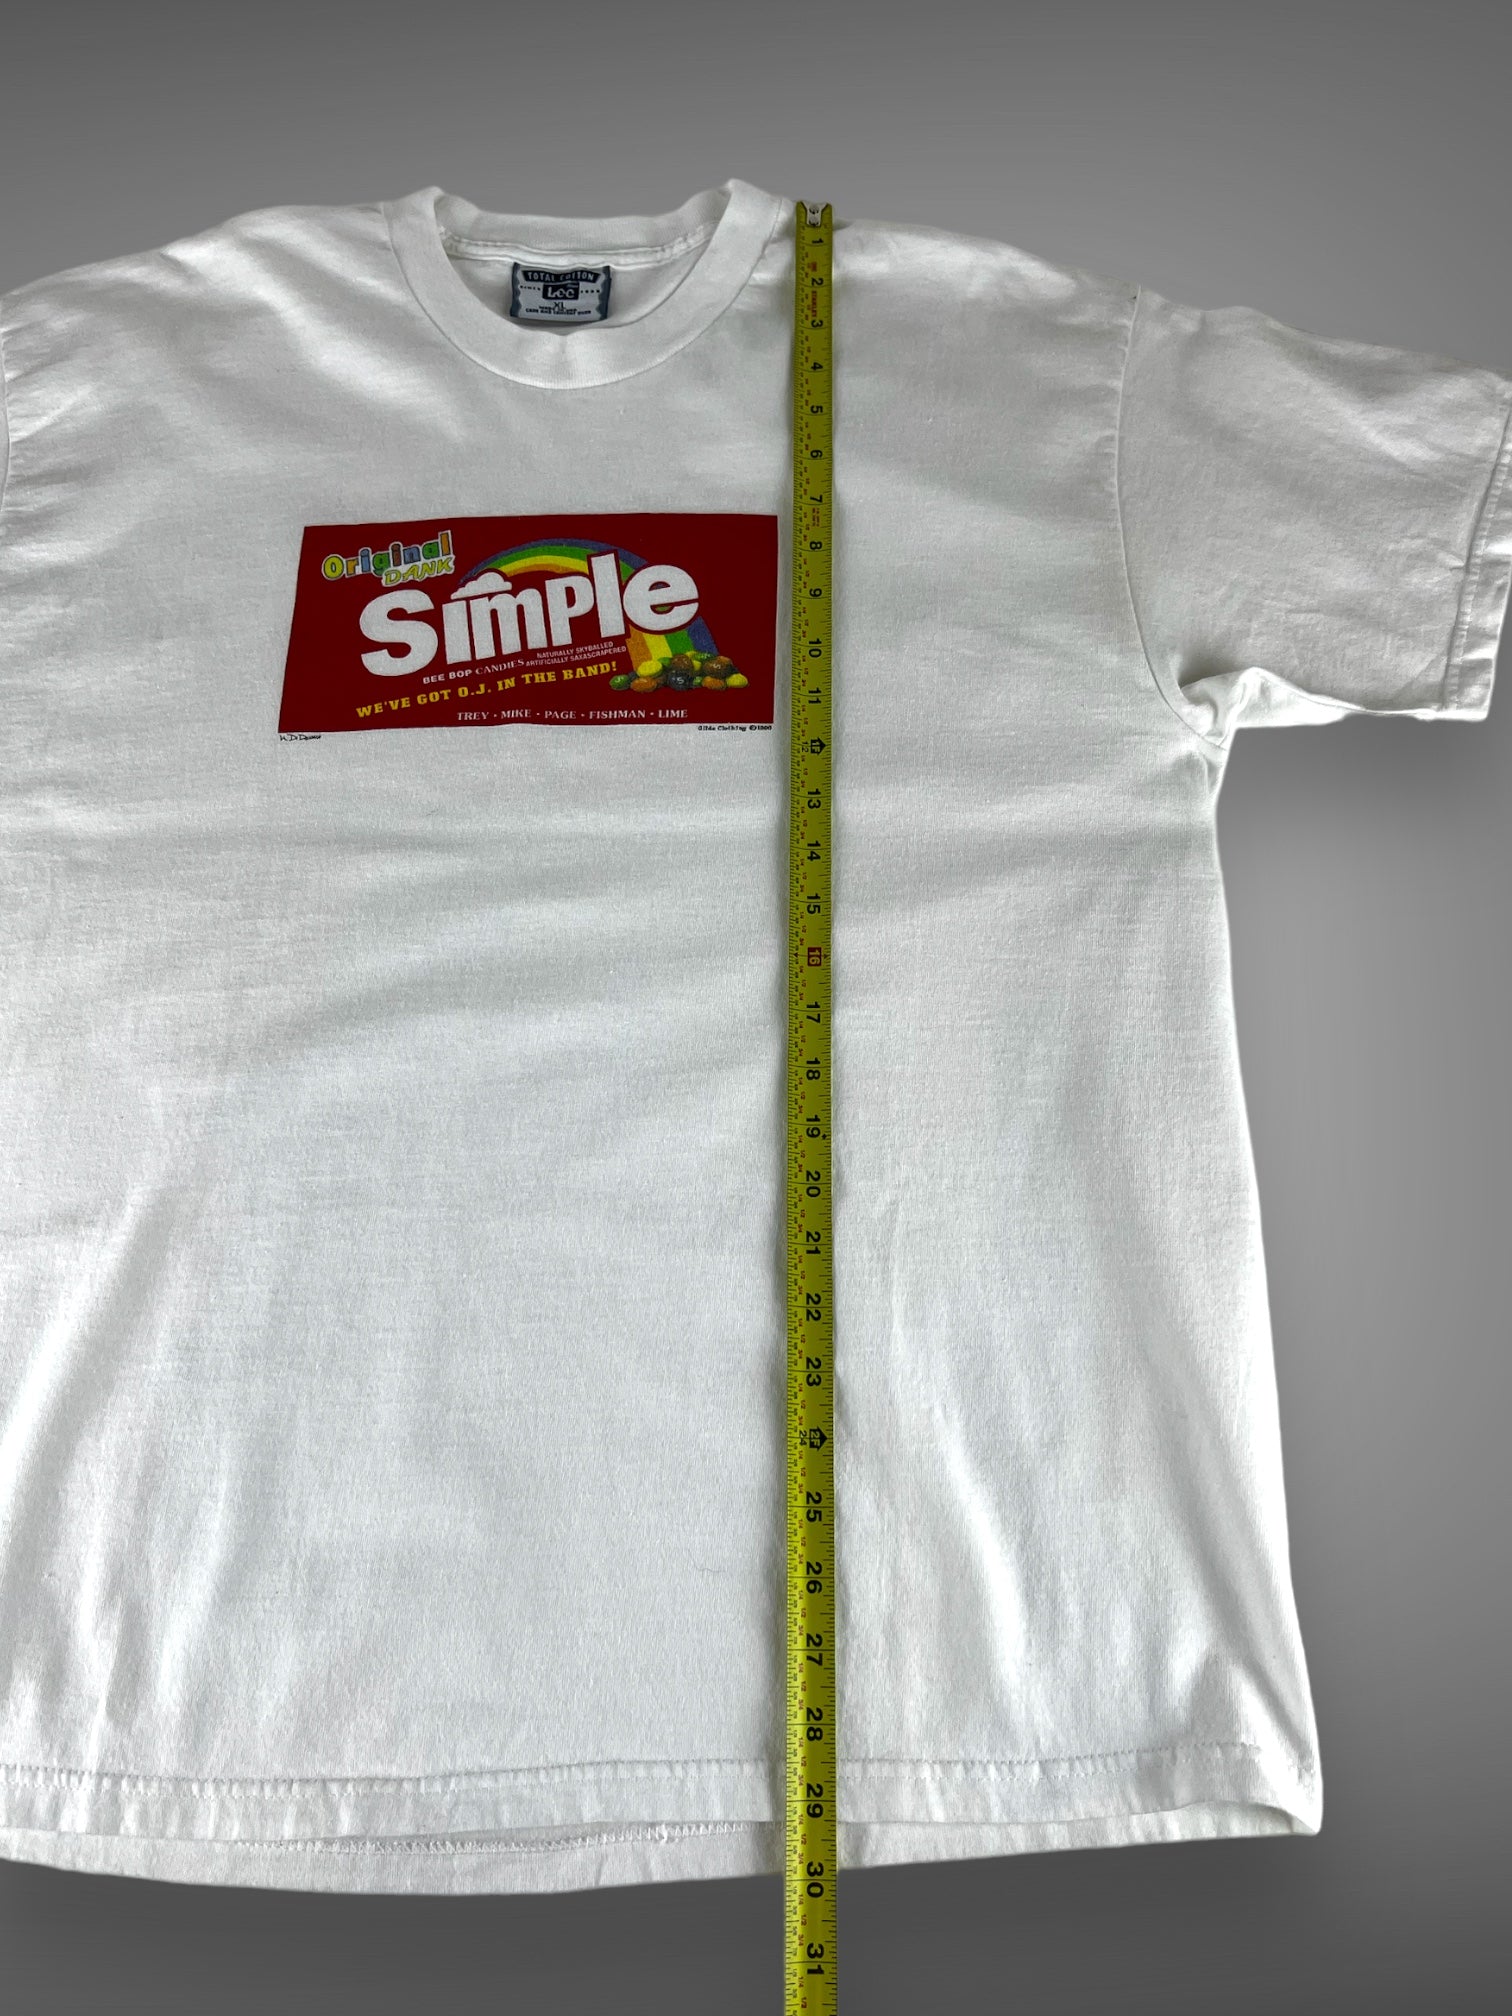 1996 Phish Simple t shirt XL